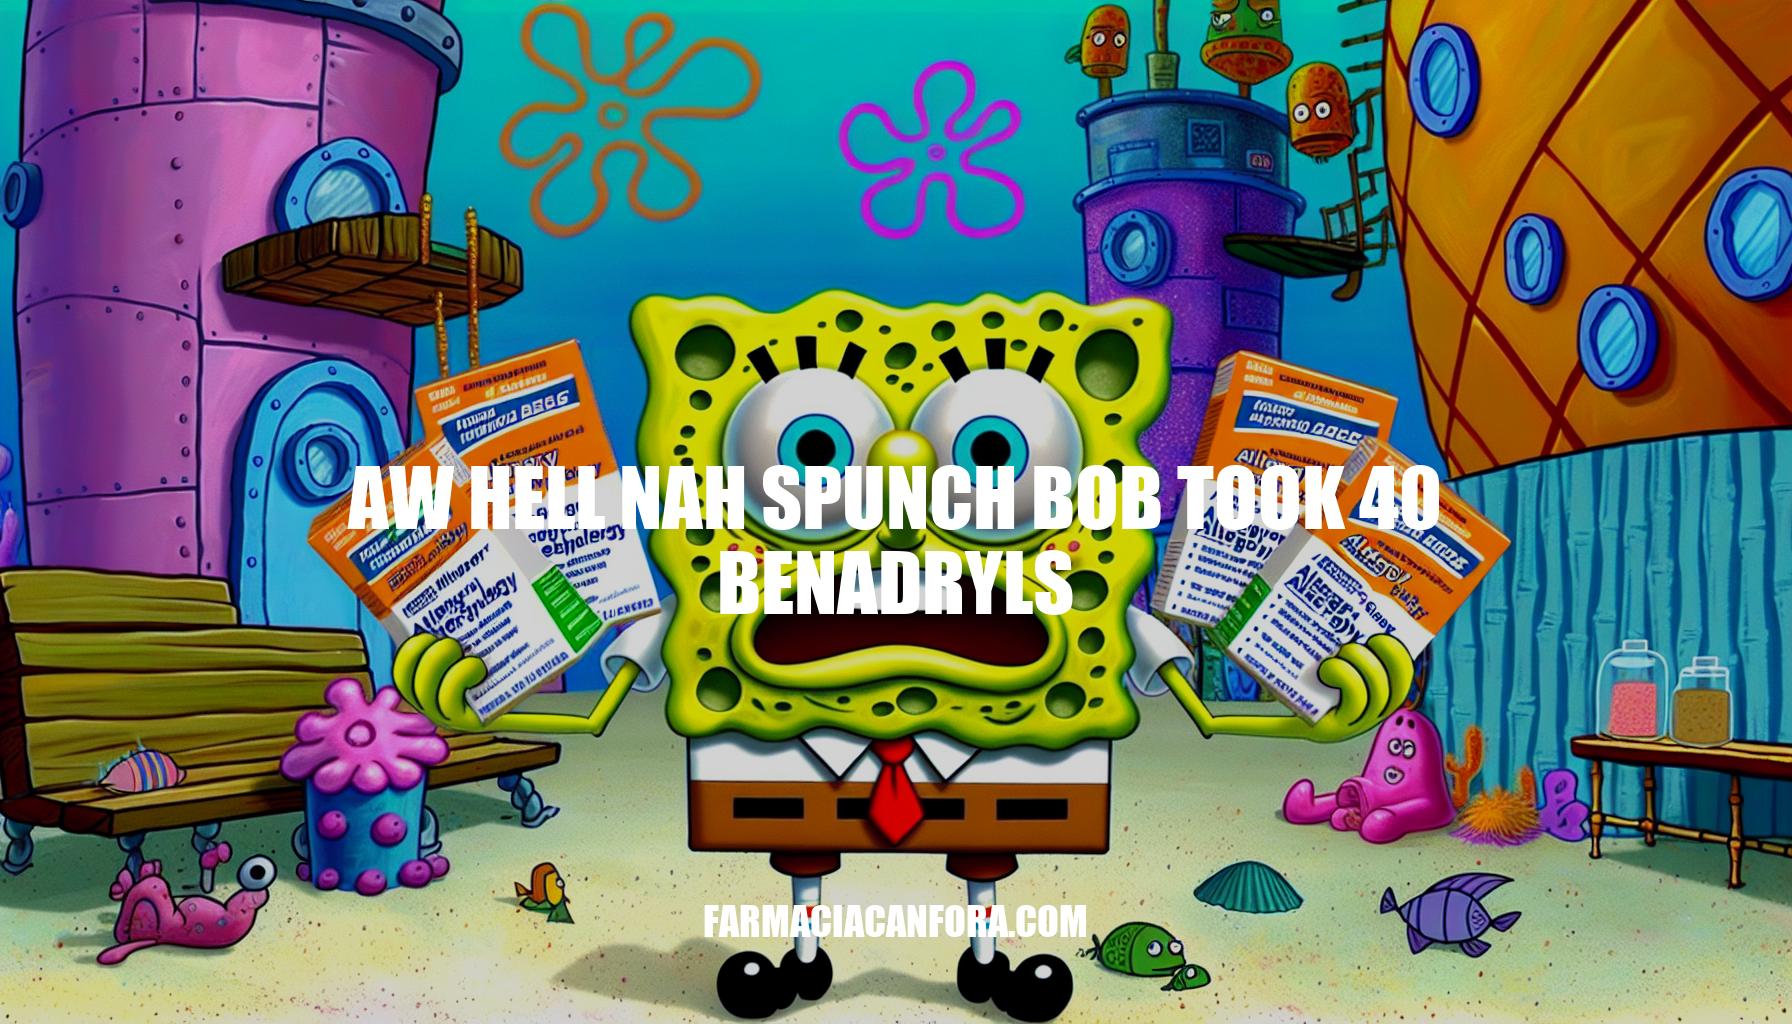 The Truth About Aw Hell Nah SpongeBob Took 40 Benadryls